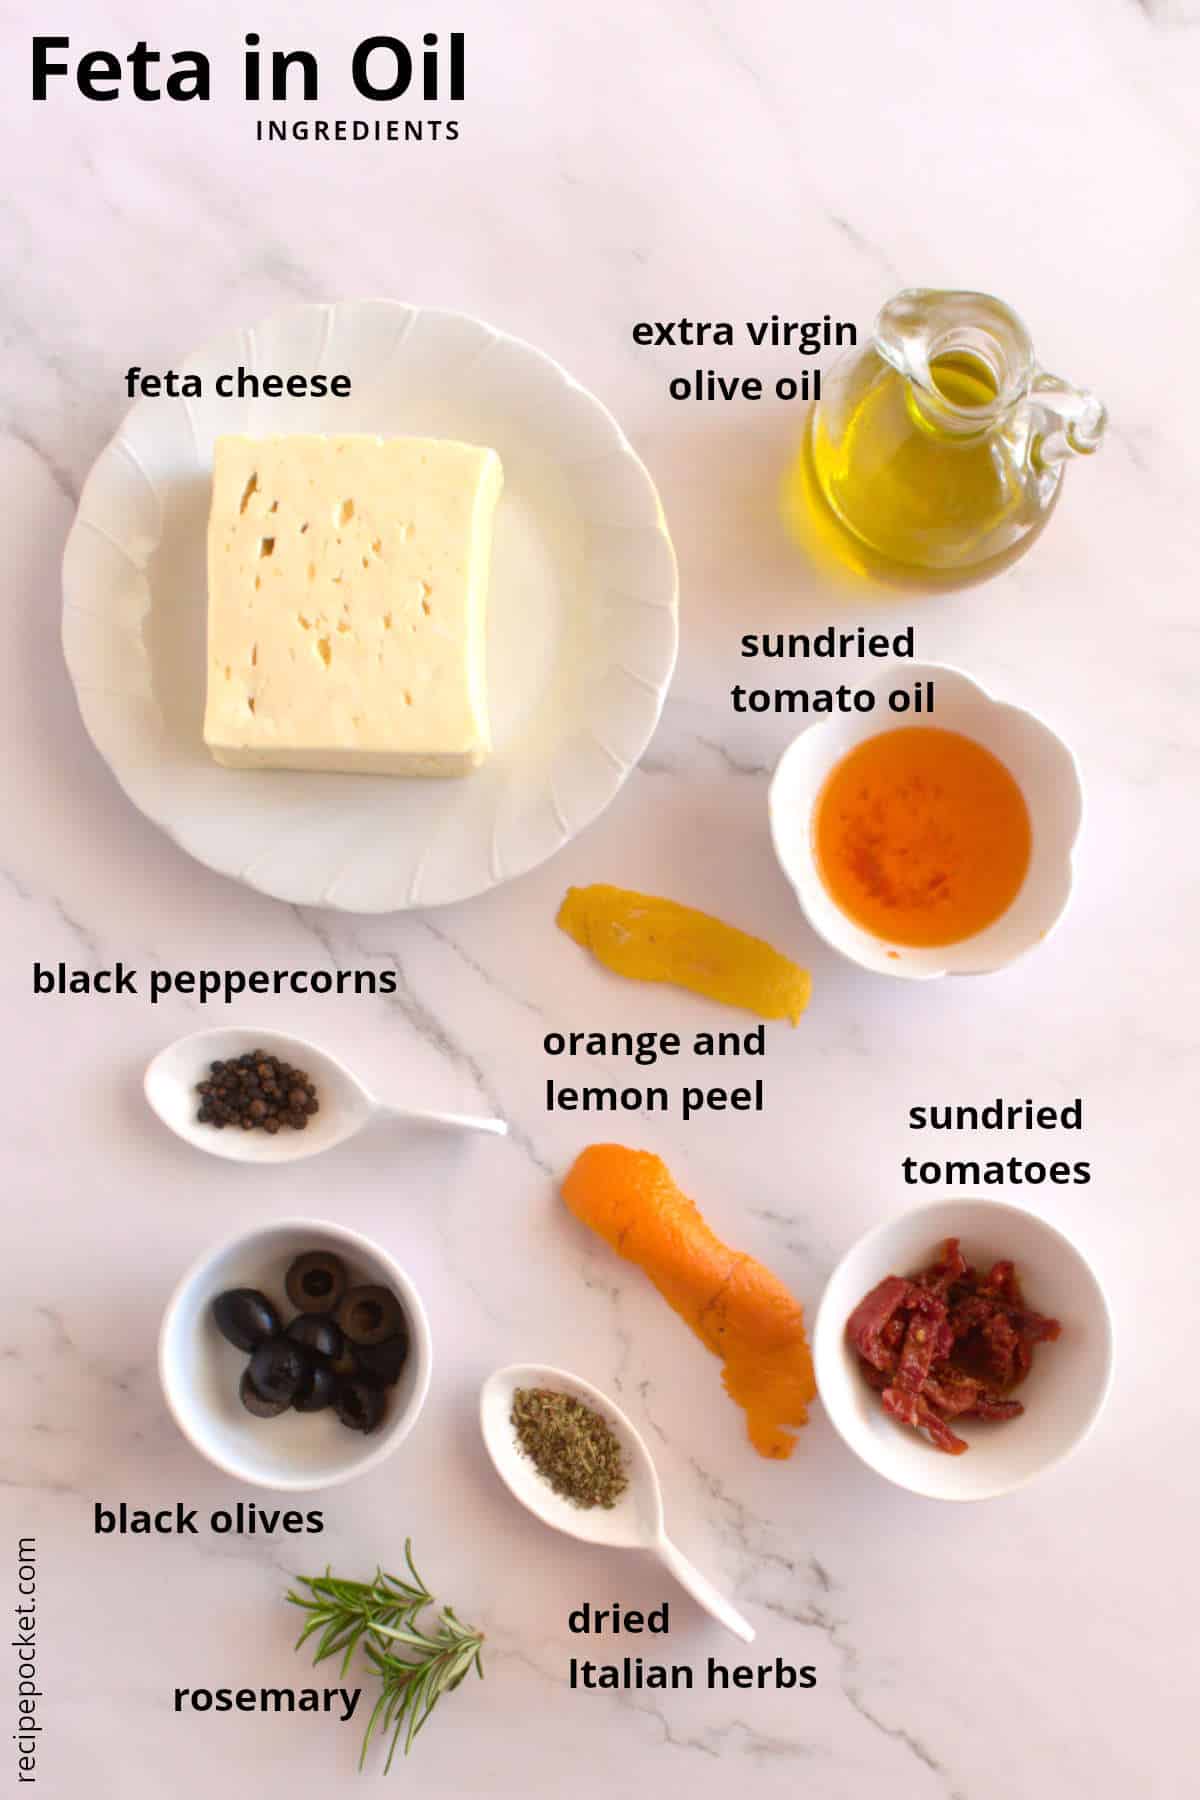 Ingredients for making feta in oil.